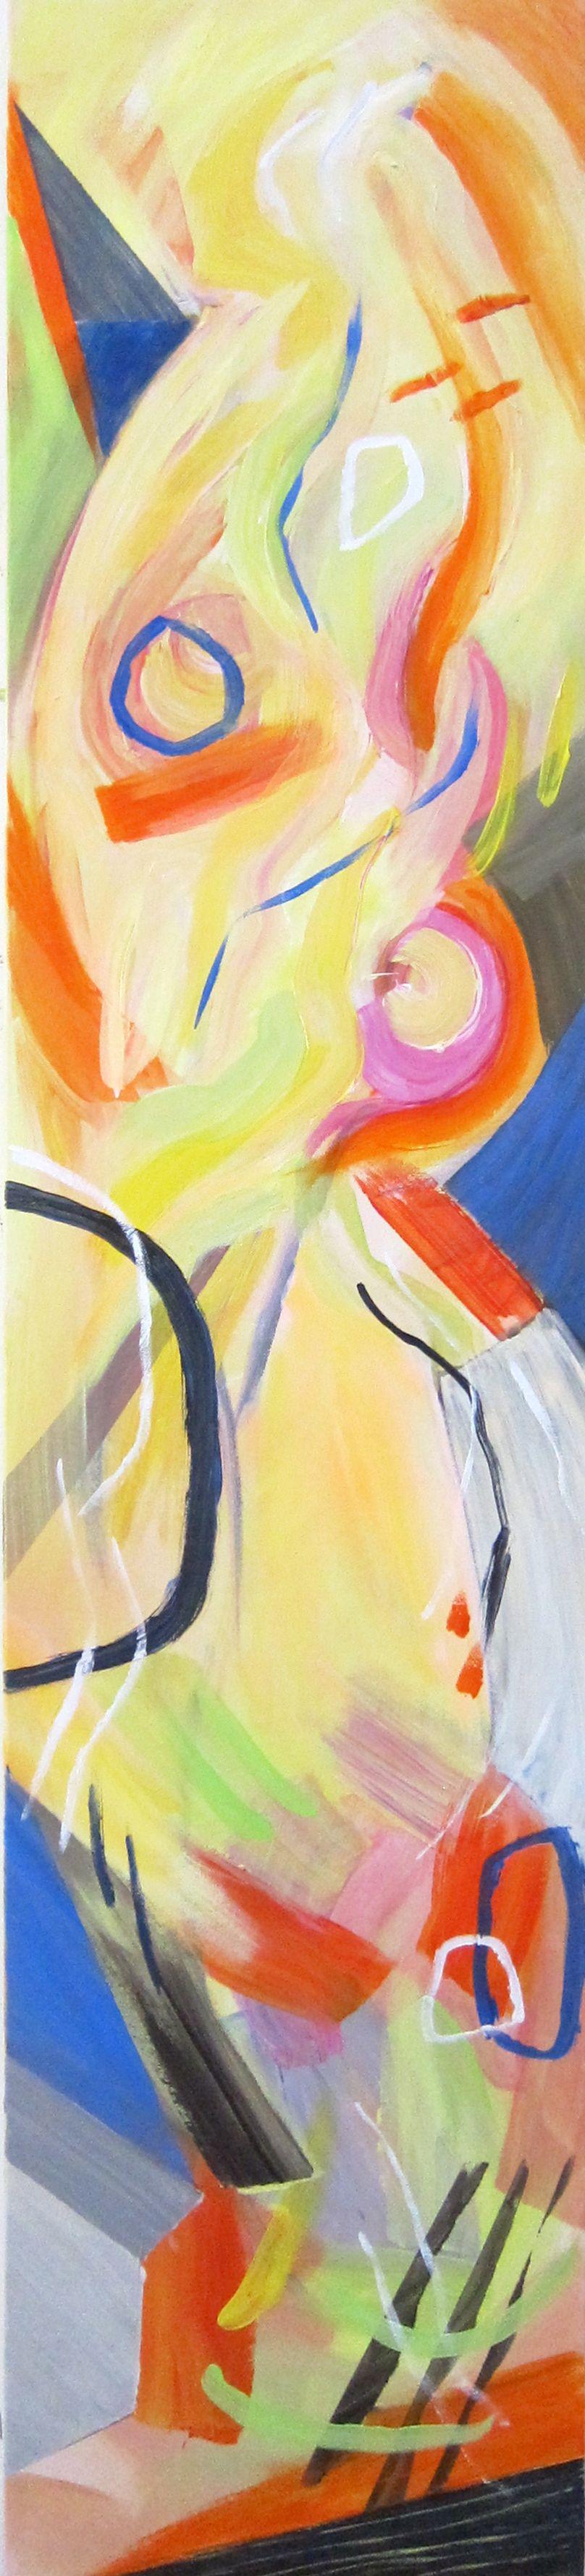 Eliane Saheurs Abstract Painting - Organic Patterns IV, Painting, Acrylic on Canvas